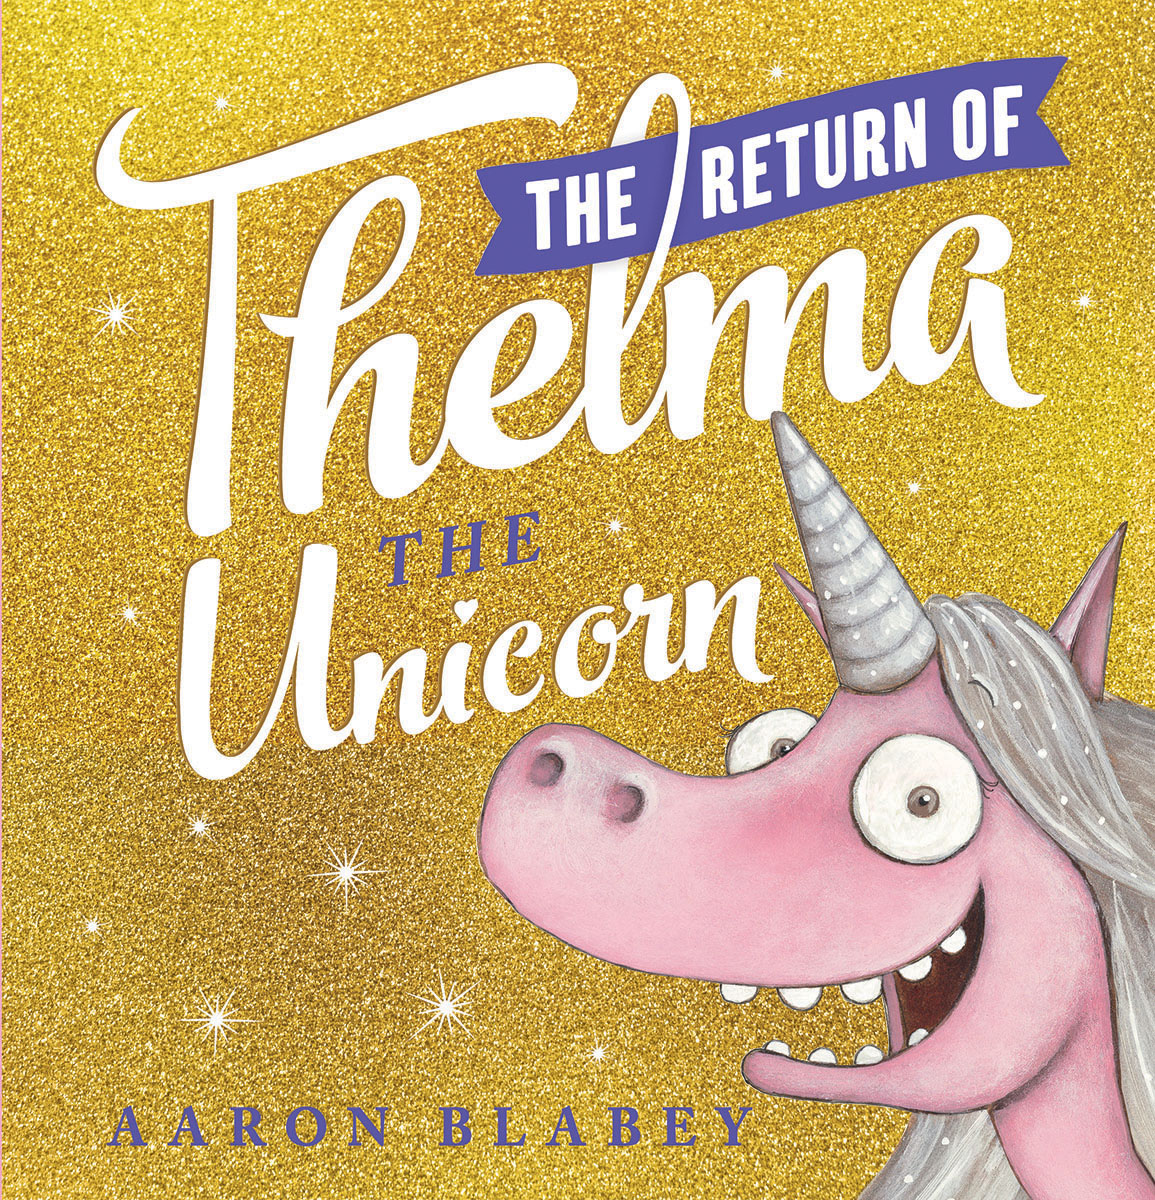 The Return of Thelma the Unicorn | Blabey, Aaron